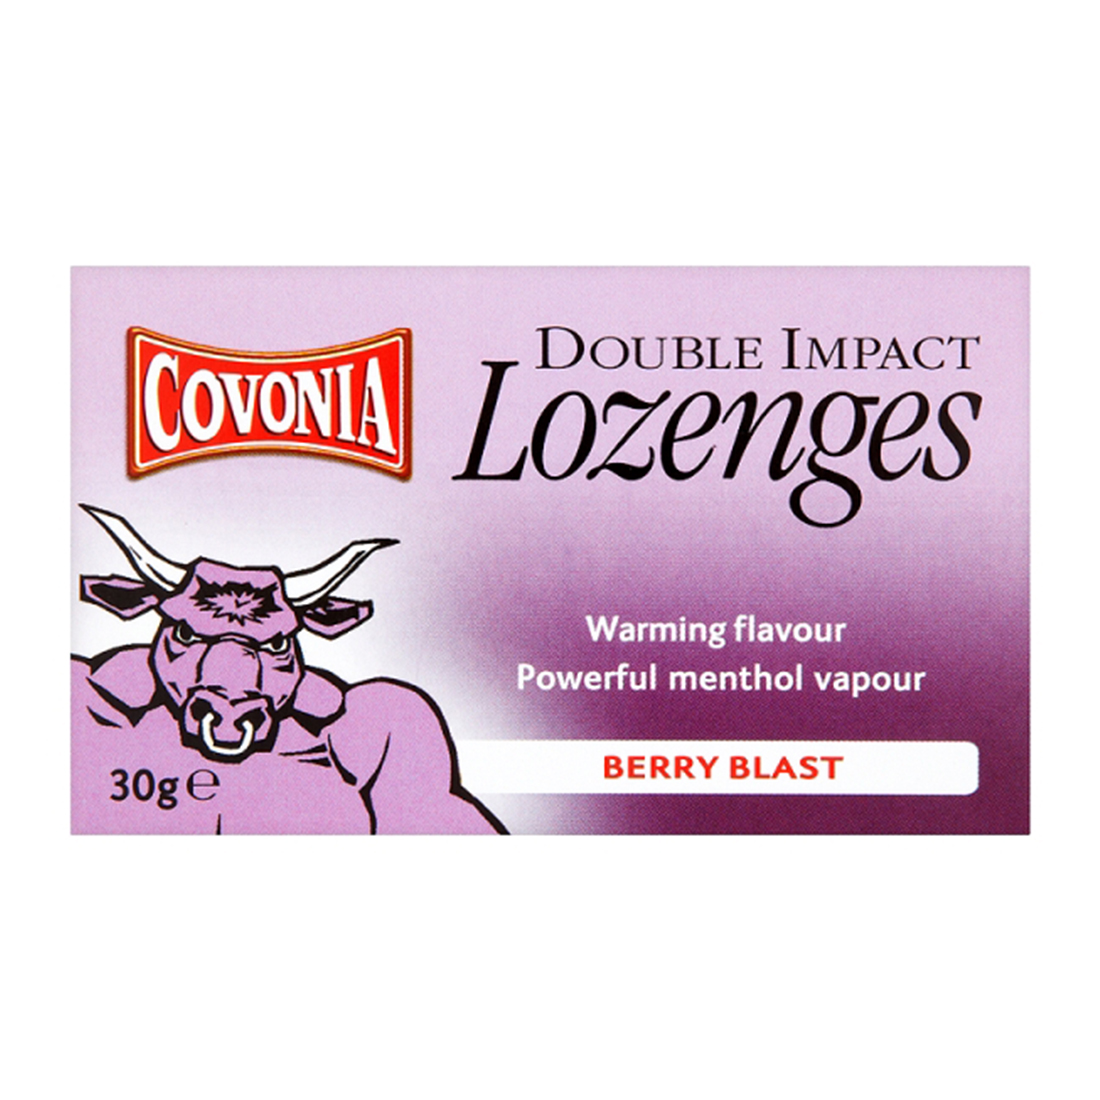 Covonia Lozenges Berry Blast 30G